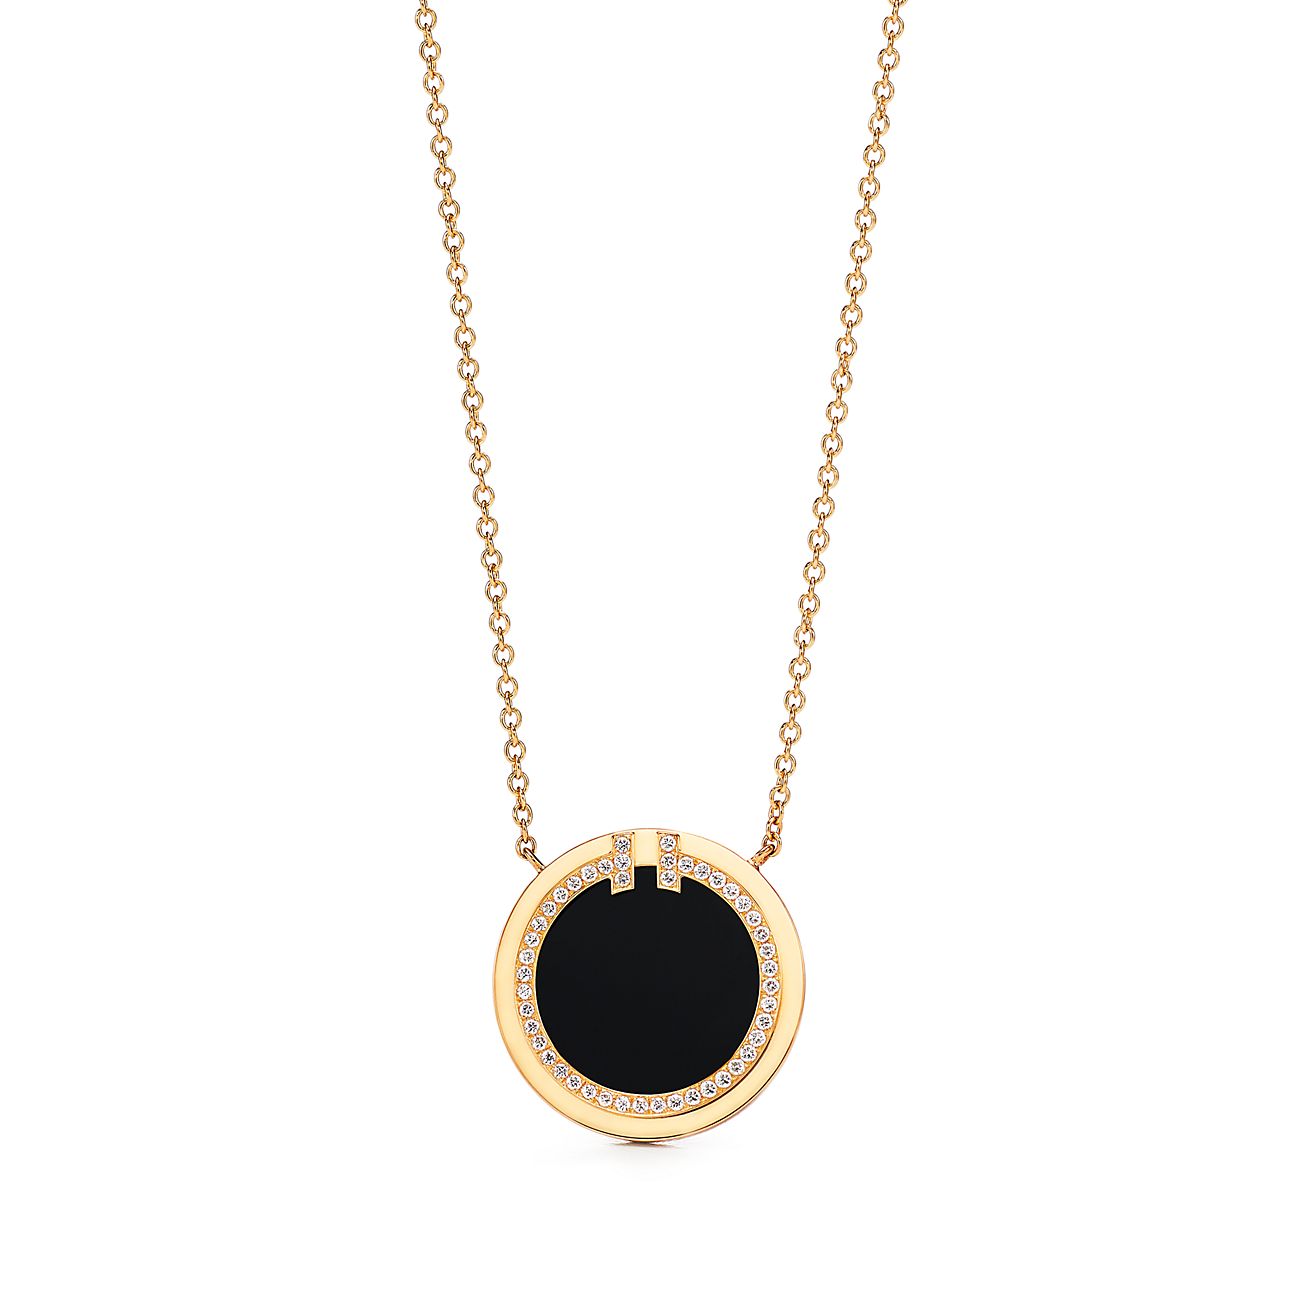 Cotton necklace with ceramic pendant  Modern Total black necklace  Fiber and Ceramic Pendant  Geometric ceramic pendant  Fiber jewelry